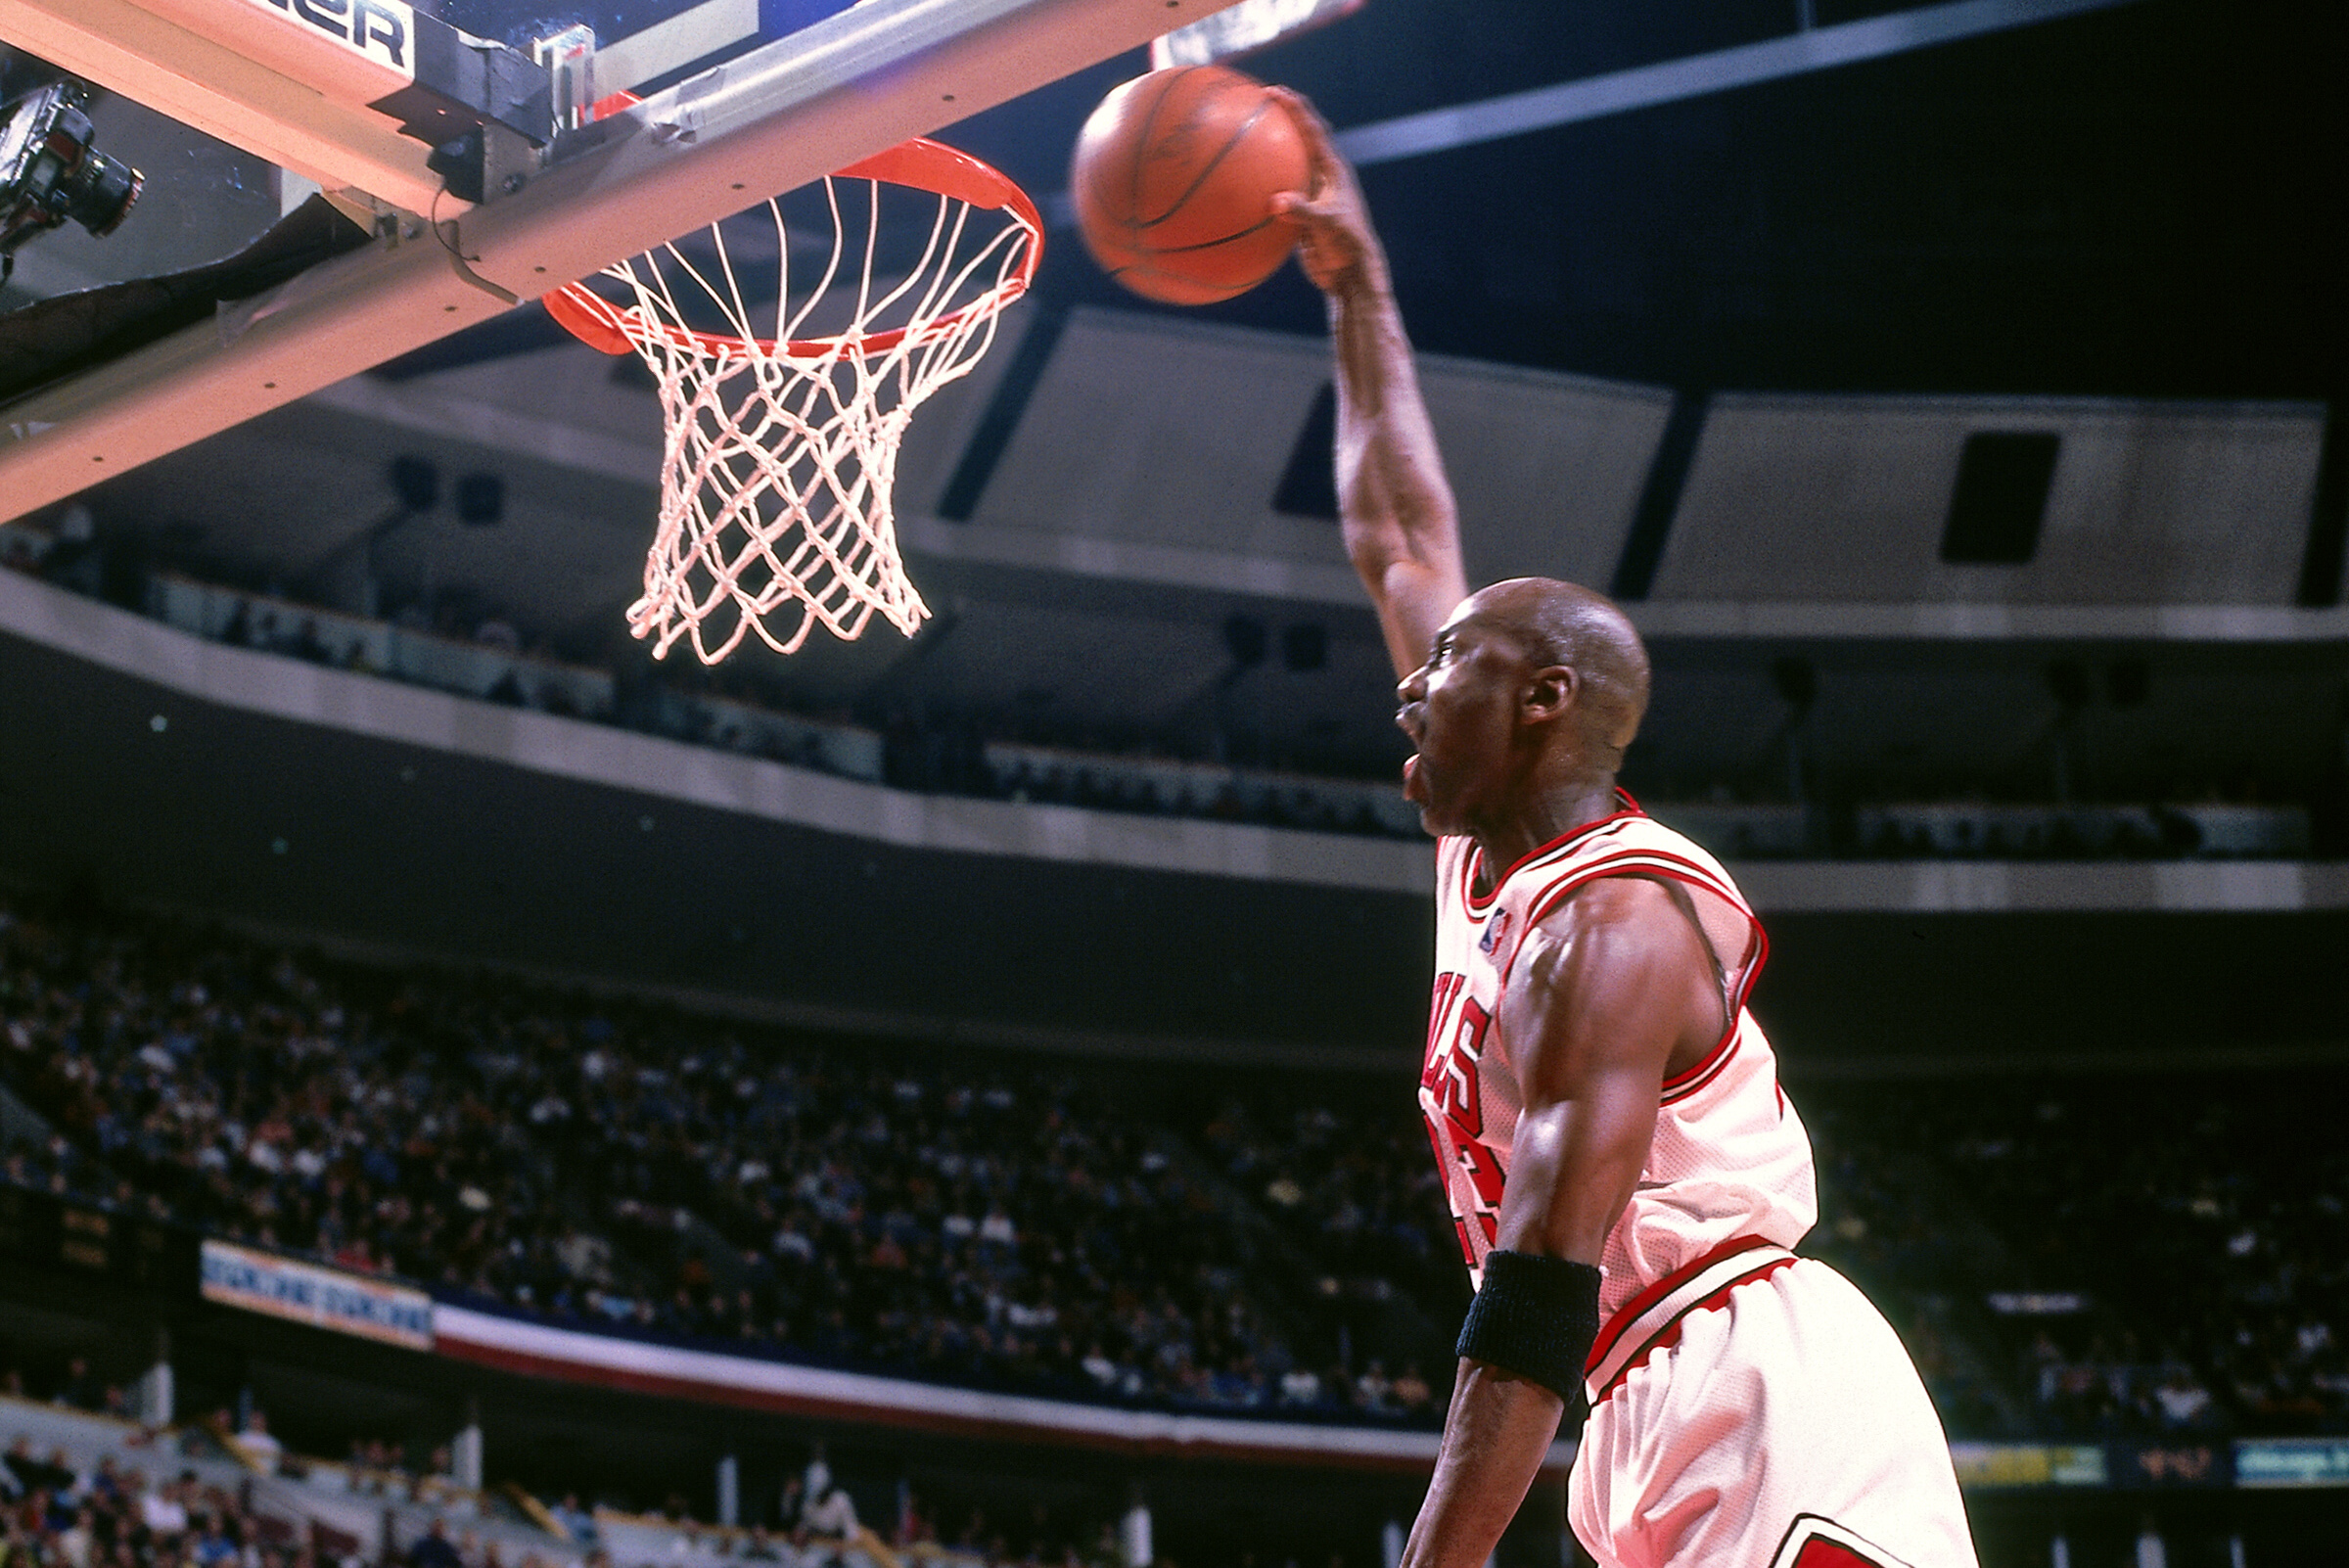 Michael Jordan 1997 Bulls Jersey Sells for $288K at Auction